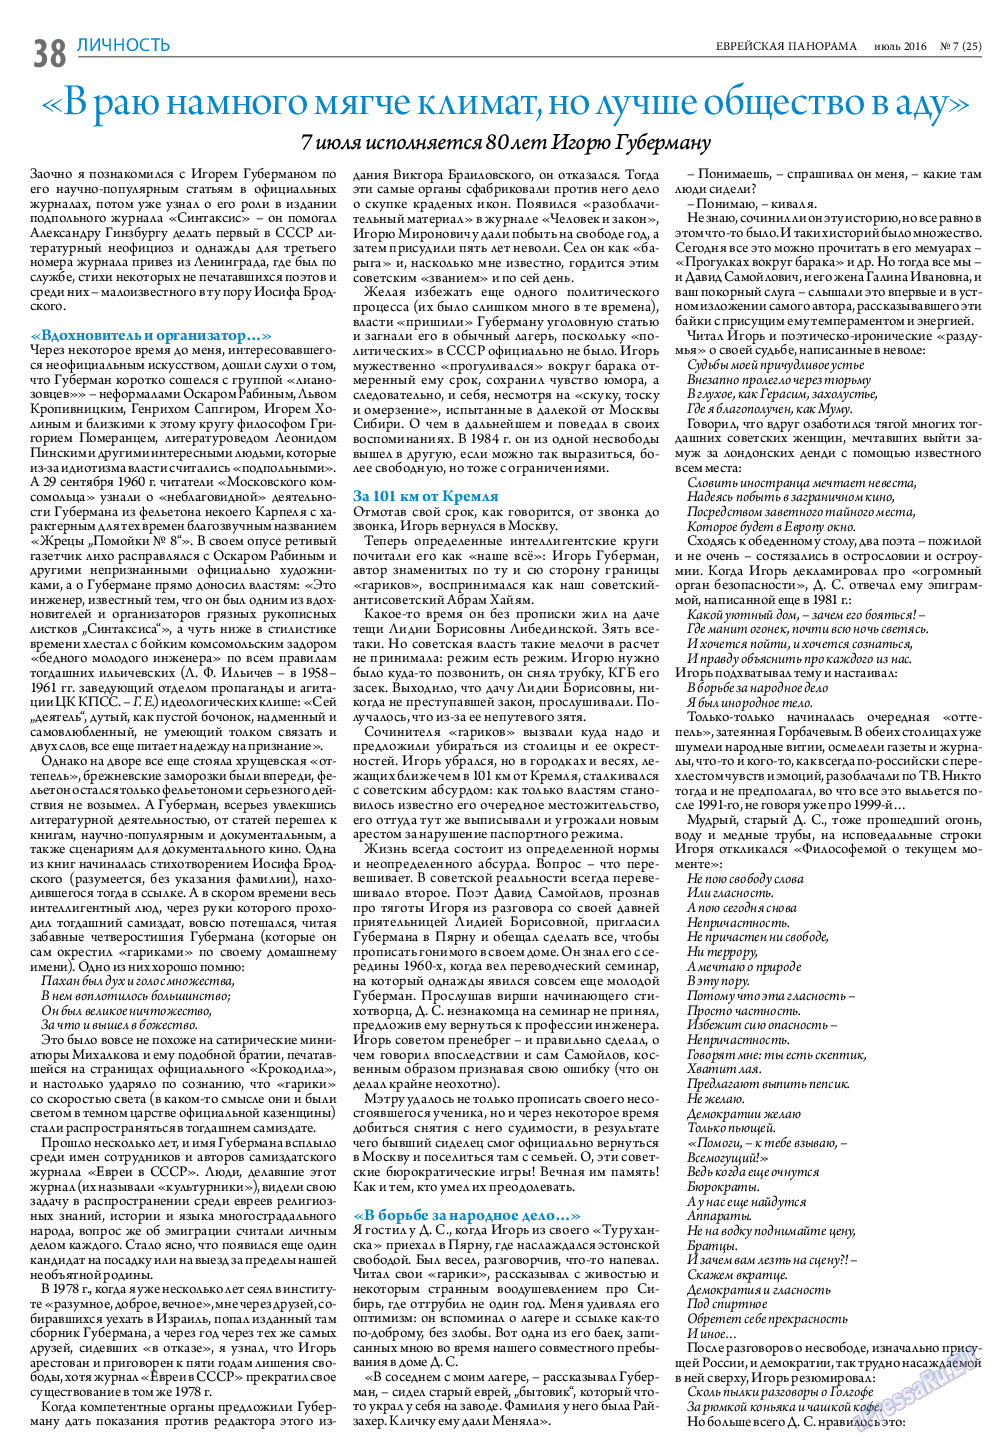 Еврейская панорама, газета. 2016 №7 стр.38